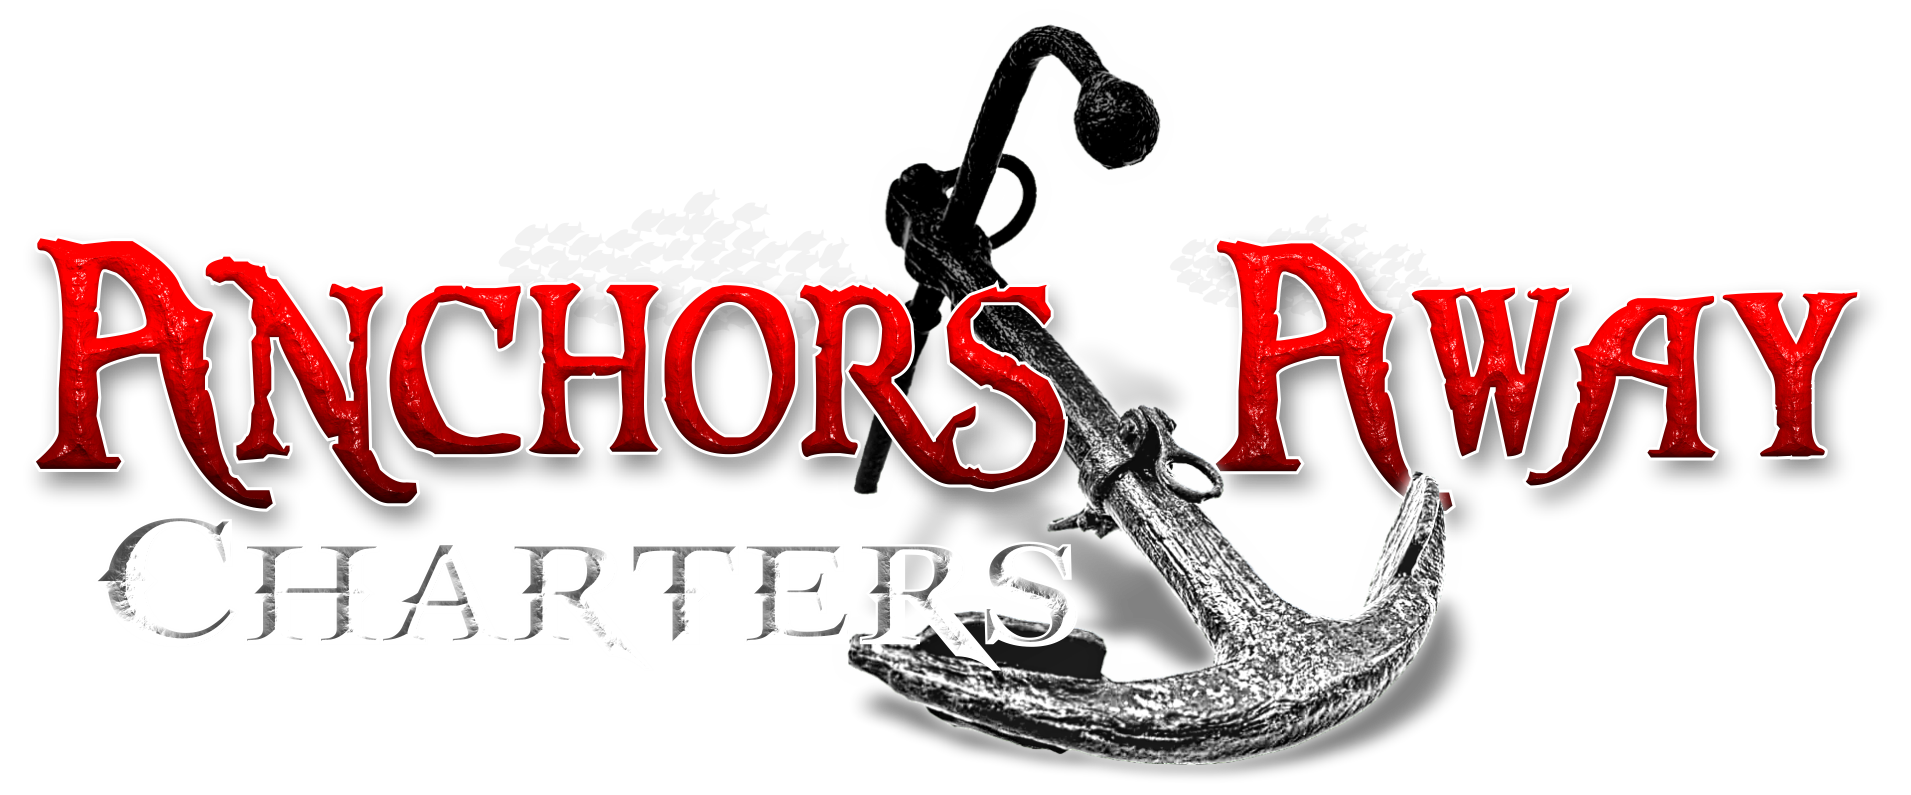 https://anchorsaway-charters.com/wp-content/uploads/2019/02/Anchors-Away-Logo.png